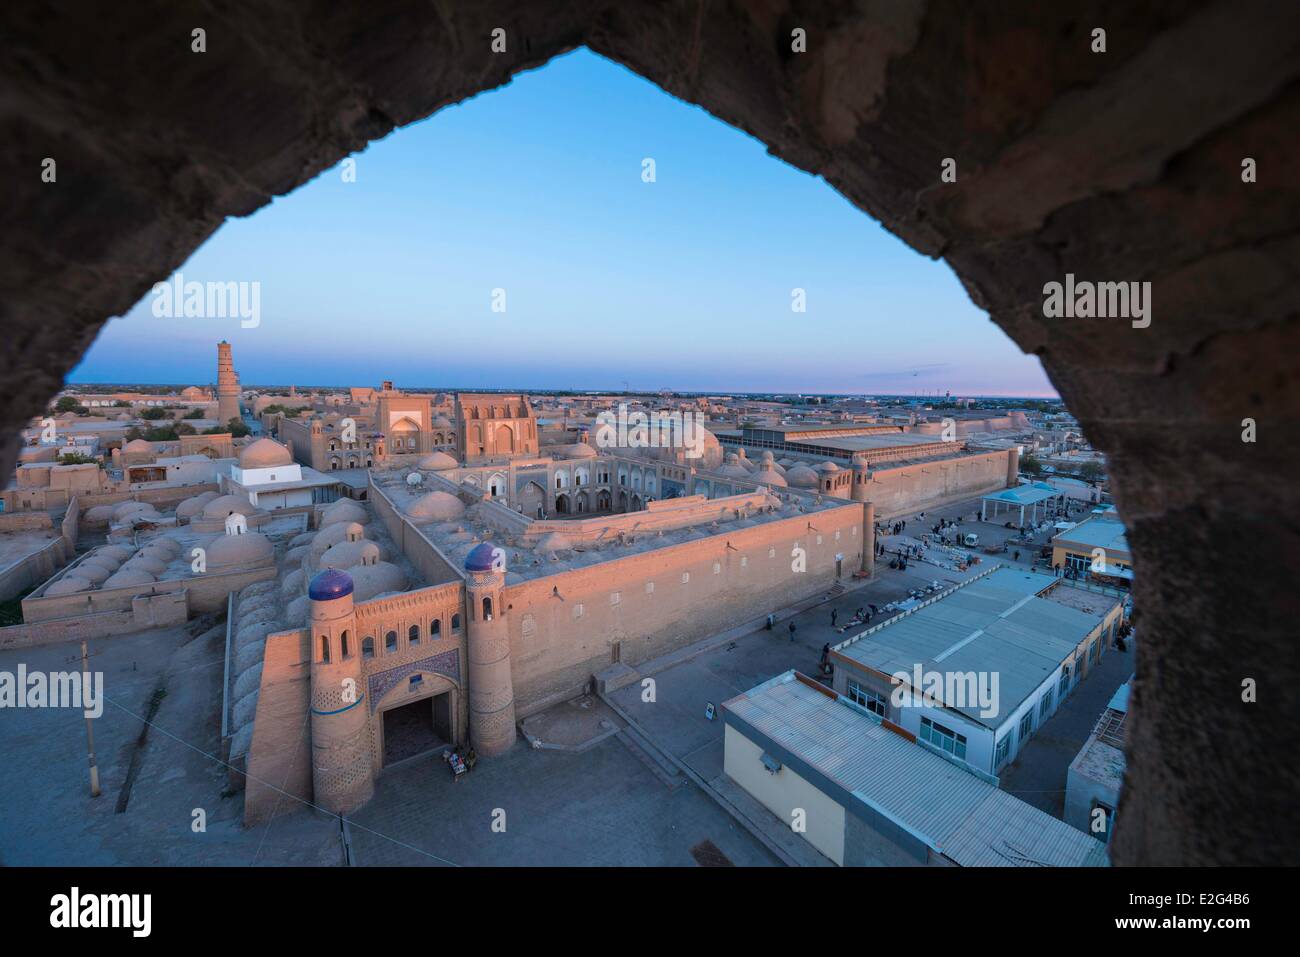 La ruta de la Seda Uzbekistán Khorezm provincia Khiva Itchan Kala ciudad protegido catalogado como patrimonio mundial por la UNESCO, vista de la ciudad y el Islam Foto de stock